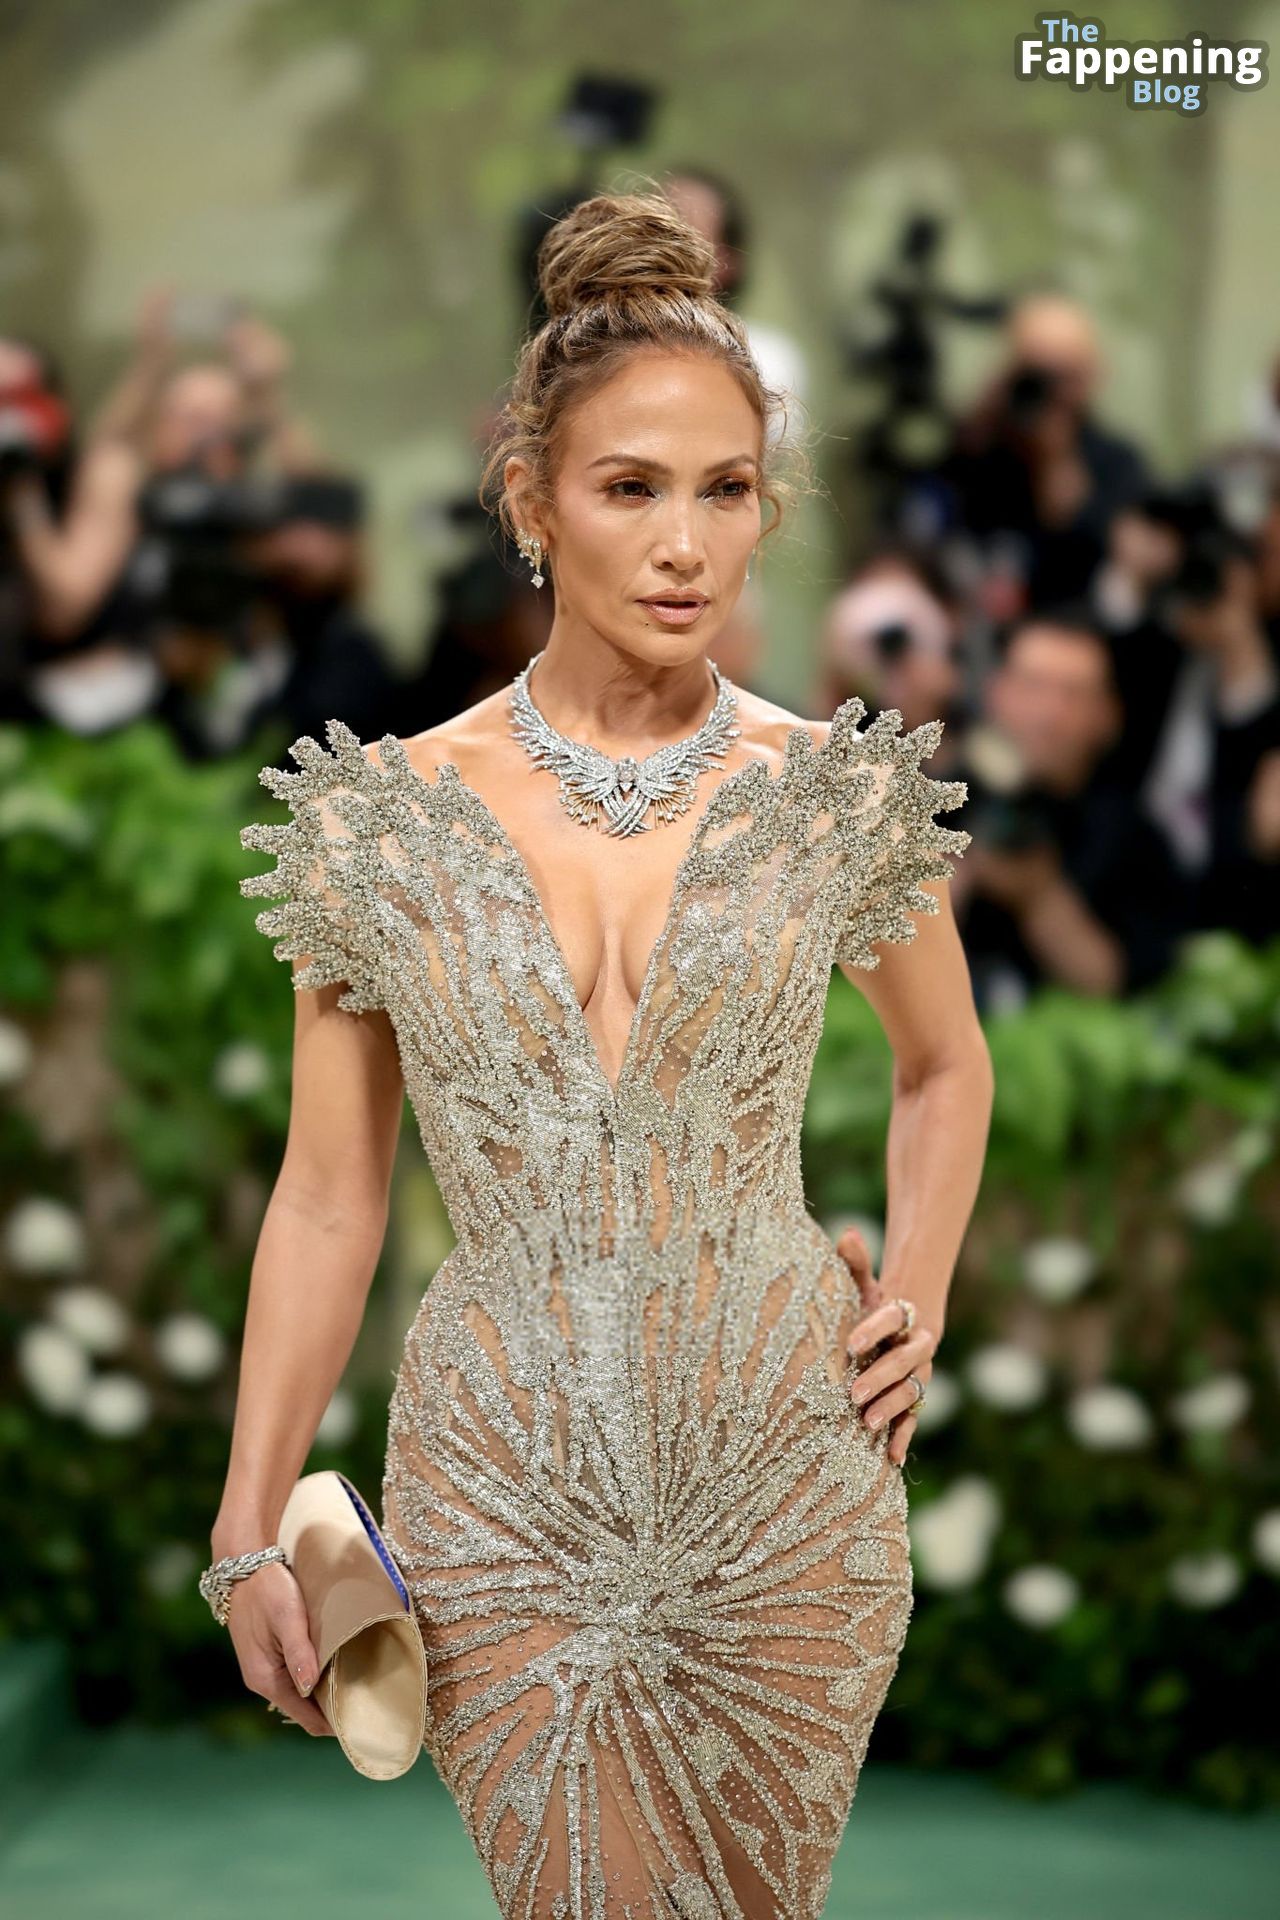 Jennifer-Lopez-Hot-57-The-Fappening-Blog.jpg